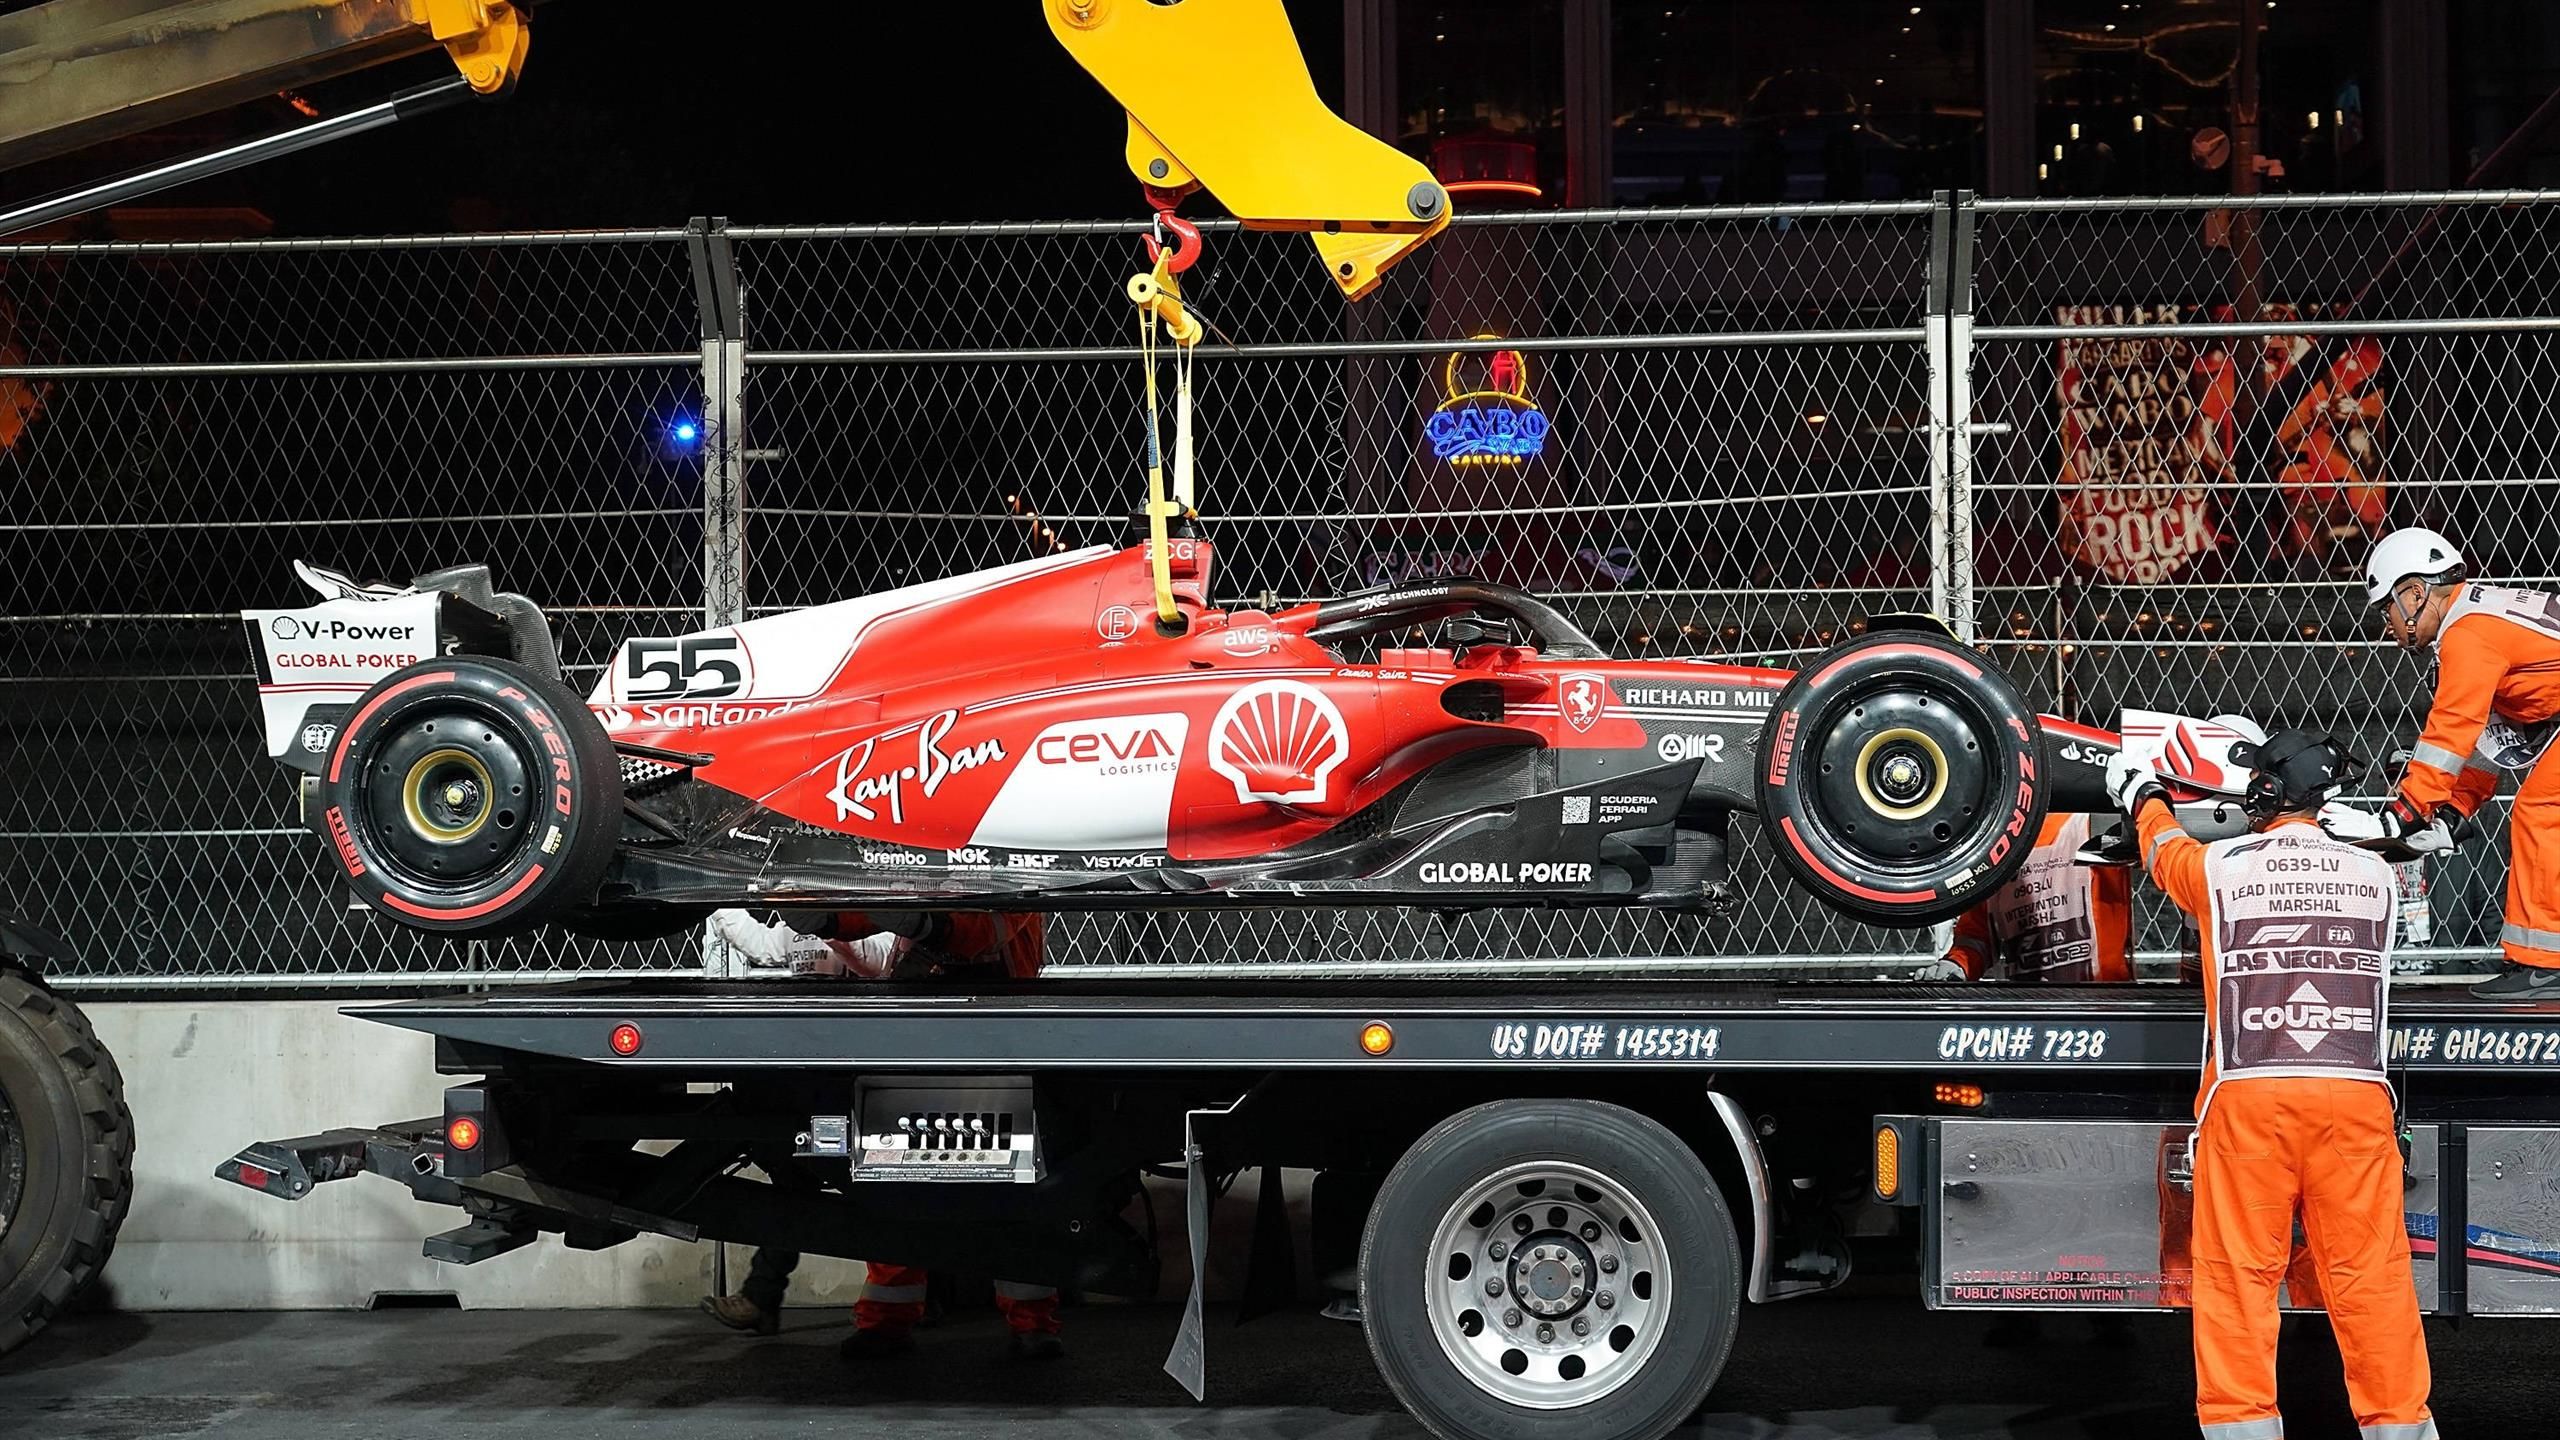 Carlos Sainz, Las Vegas crash